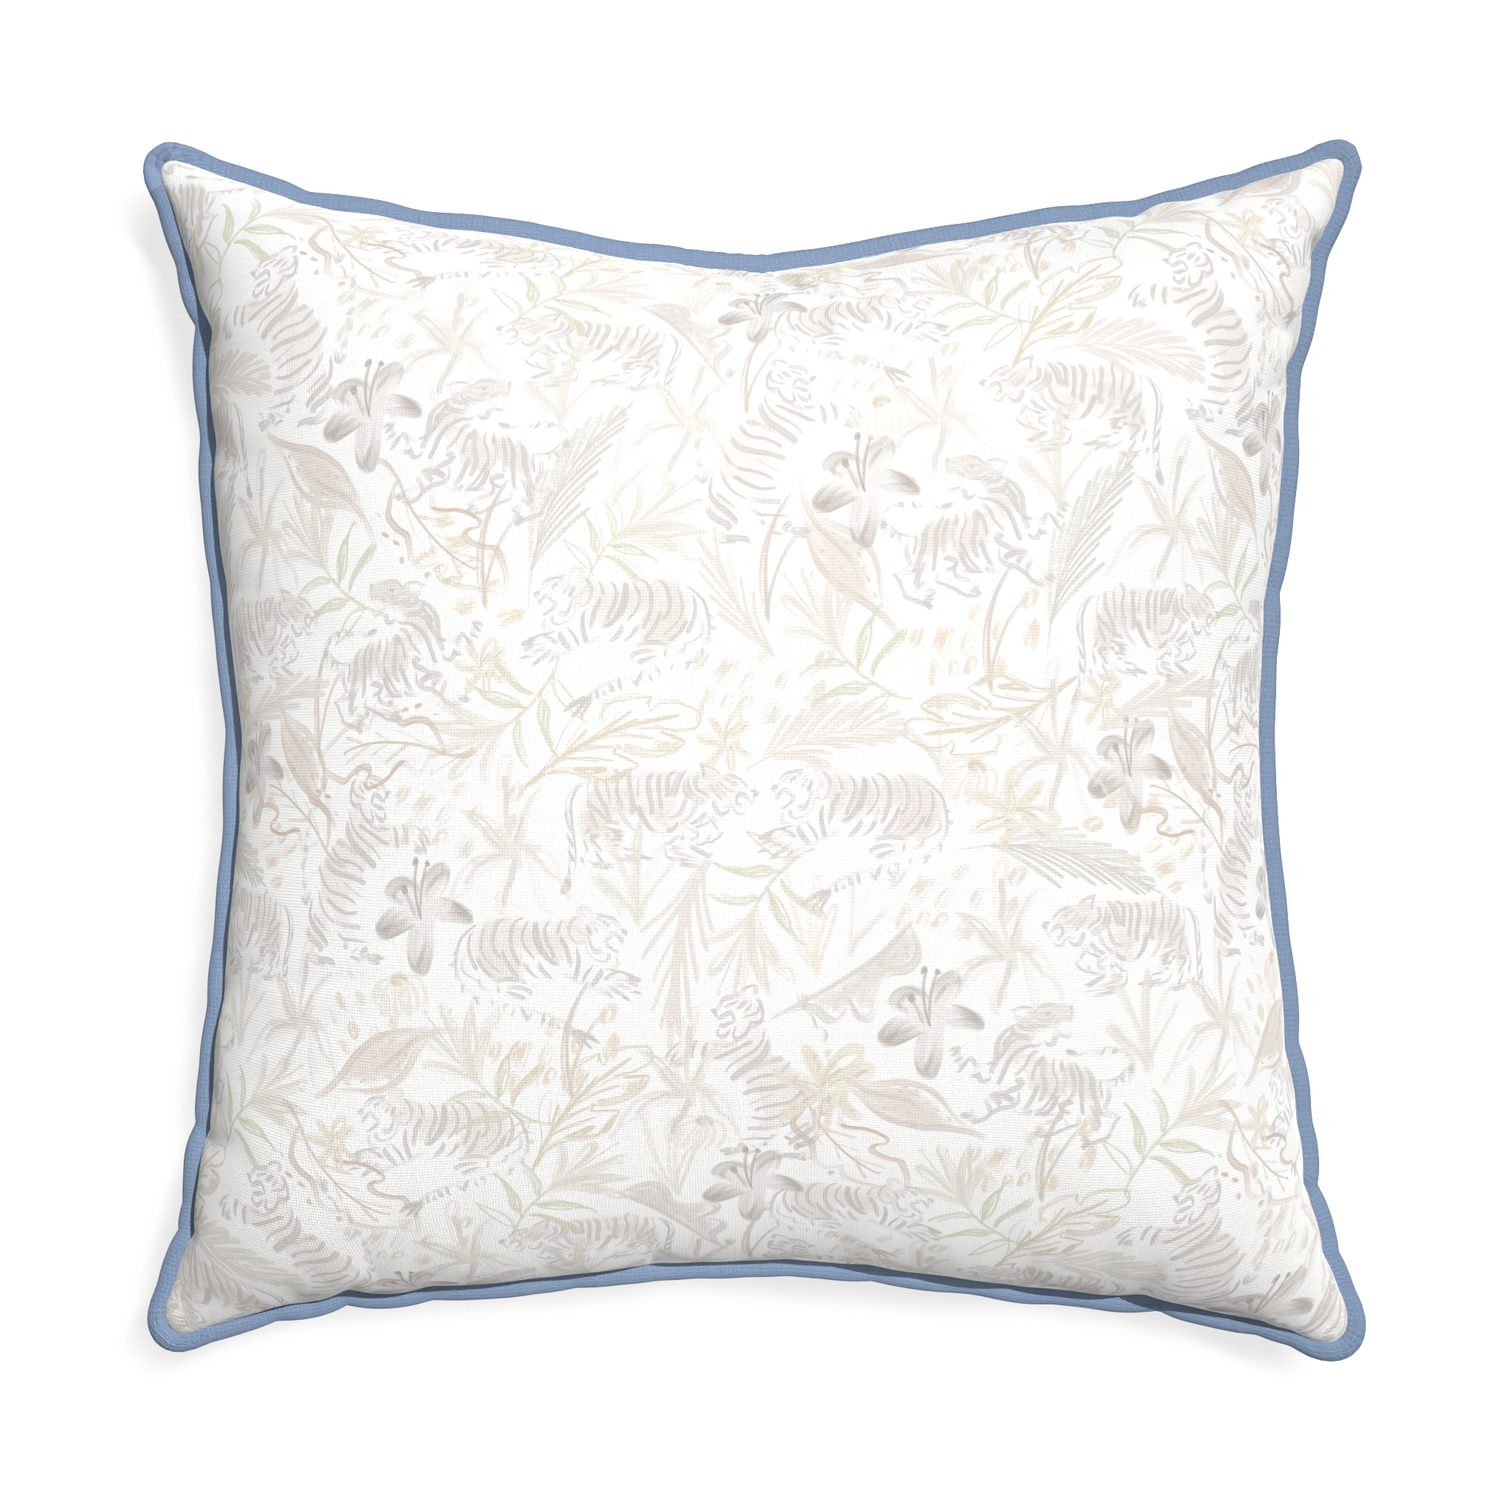 Euro-sham frida sand custom pillow with sky piping on white background